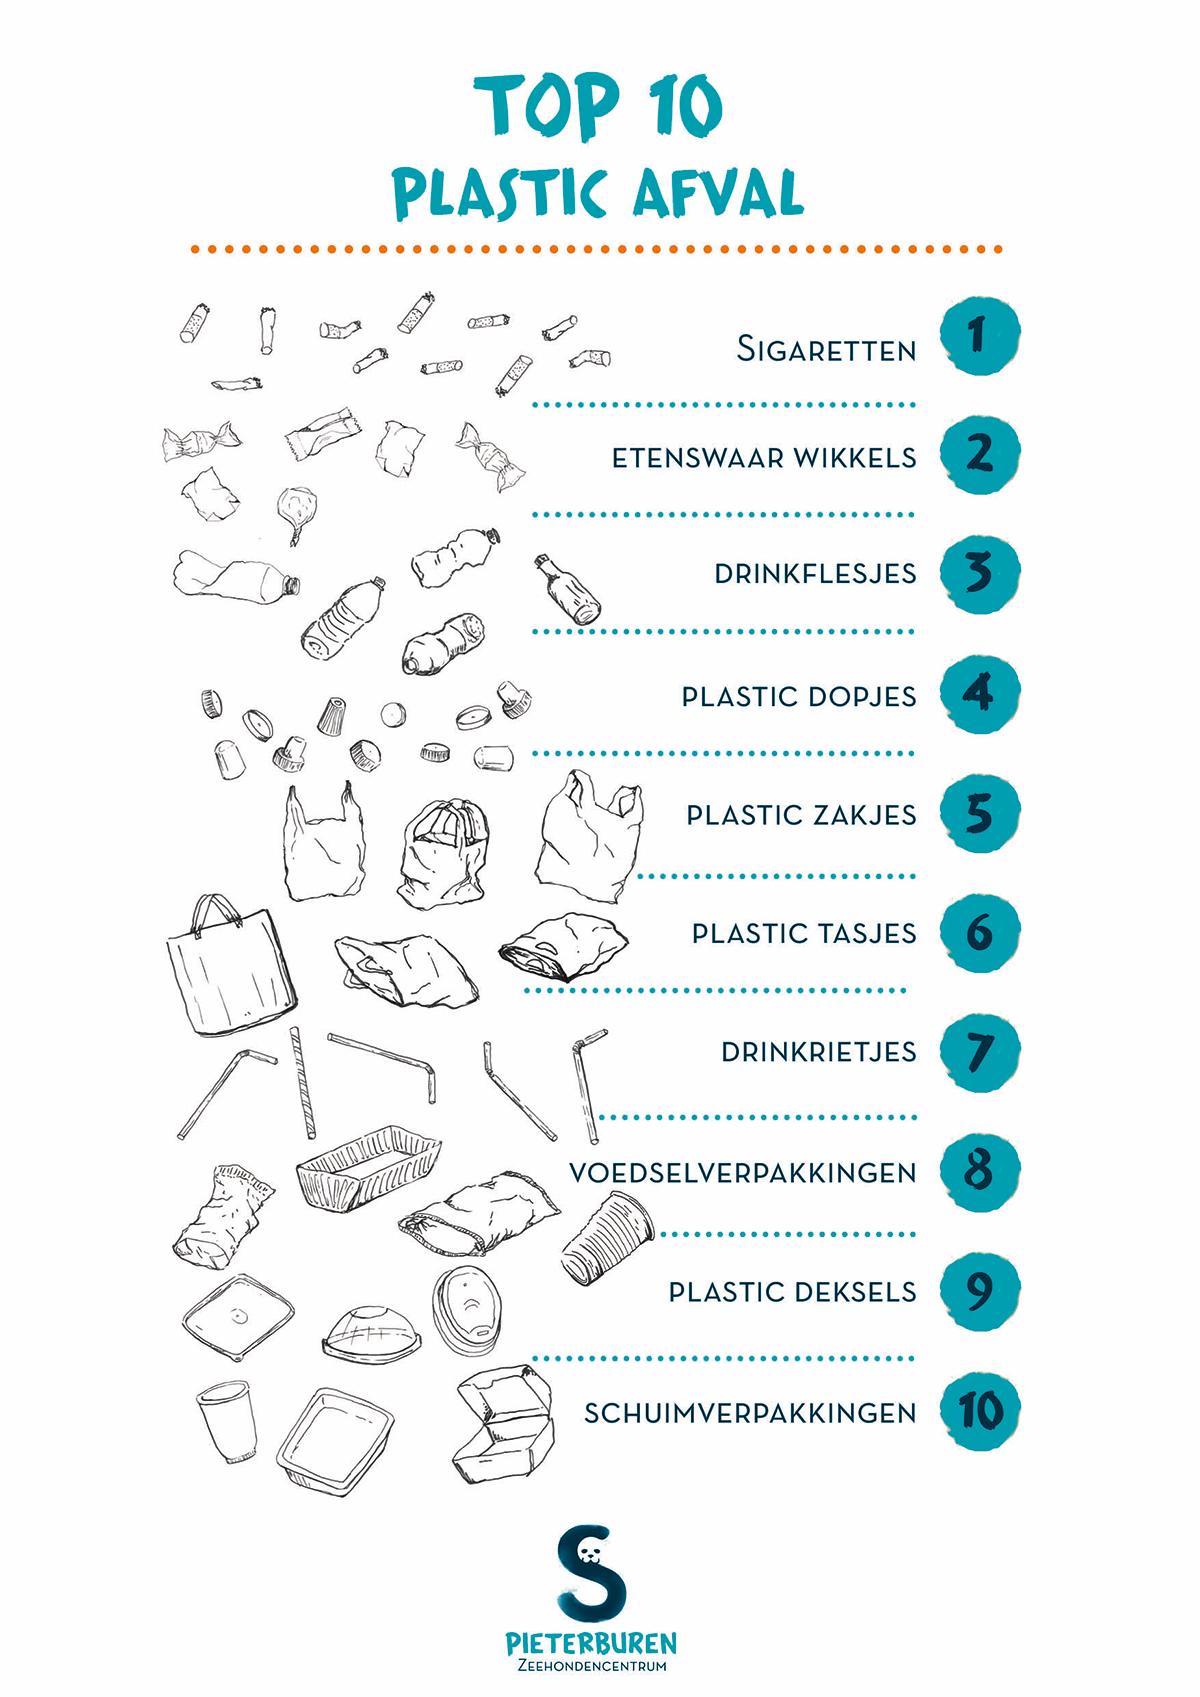 Top 10 plastic afval